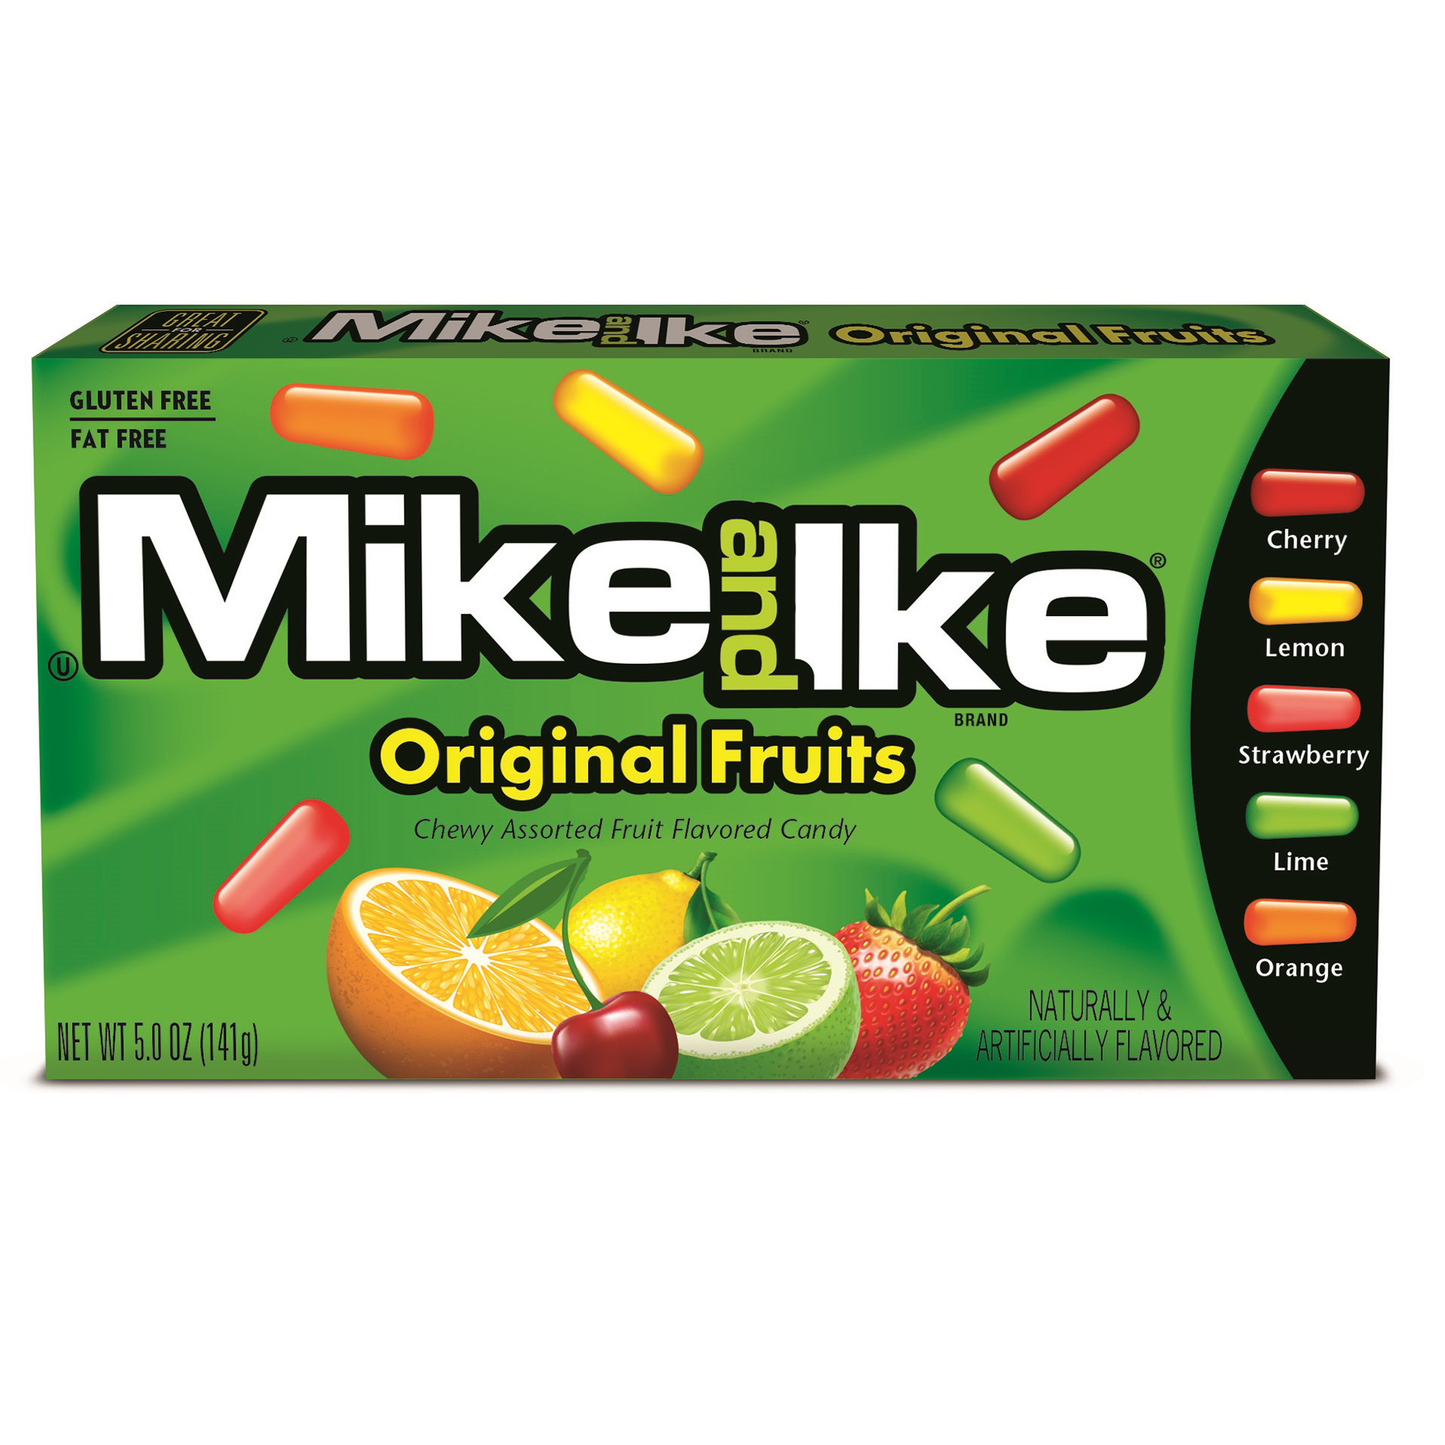 Mike & Ike Original Fruits - 141g